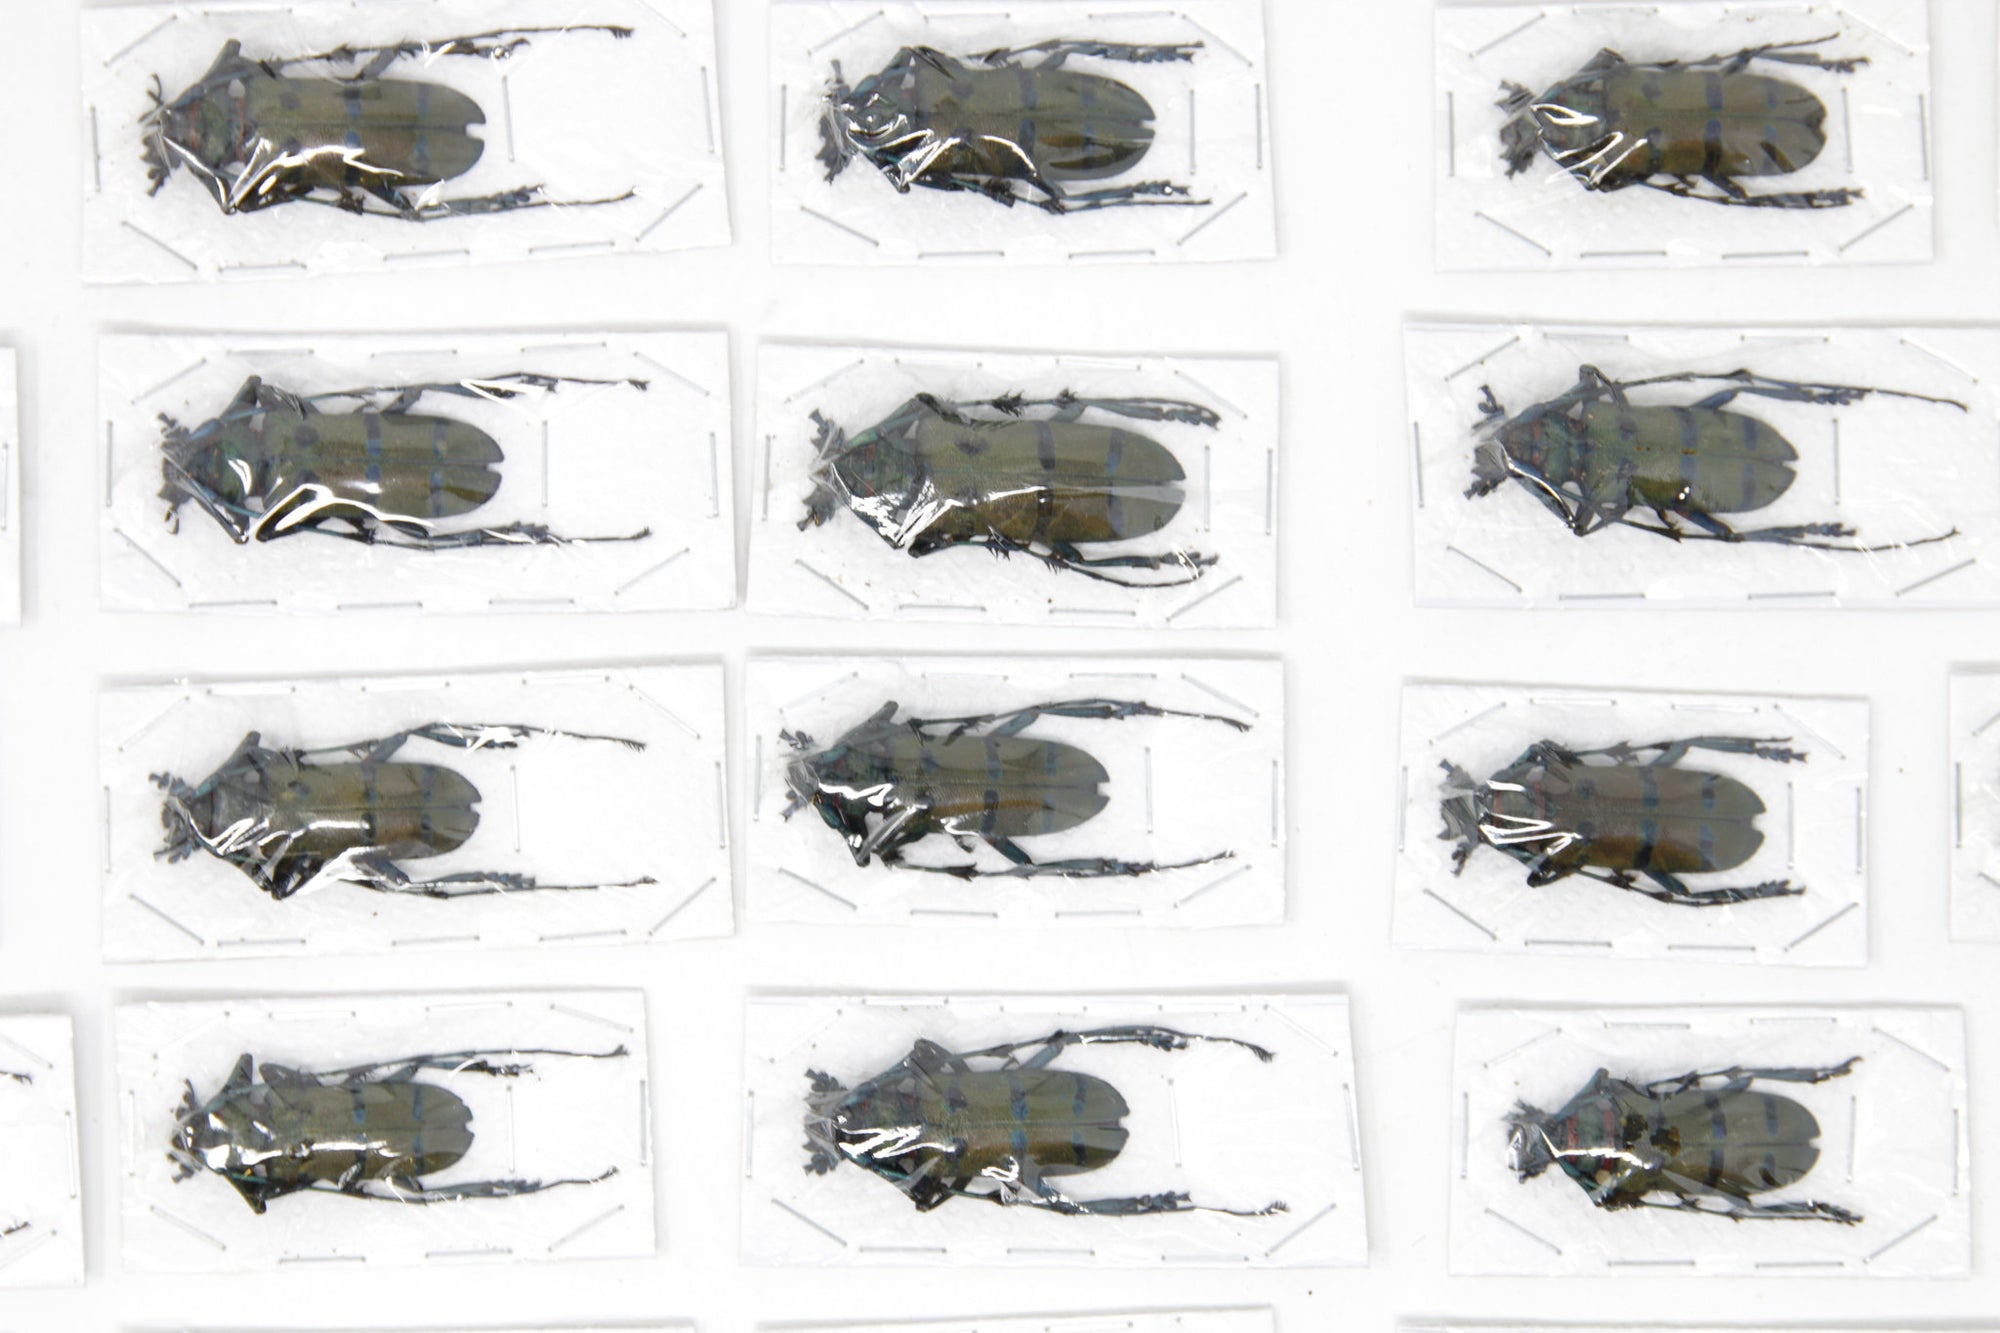 10 x Diostocera wallichi tonkinensis | Long-horn Beetles | A1 Unmounted Specimens